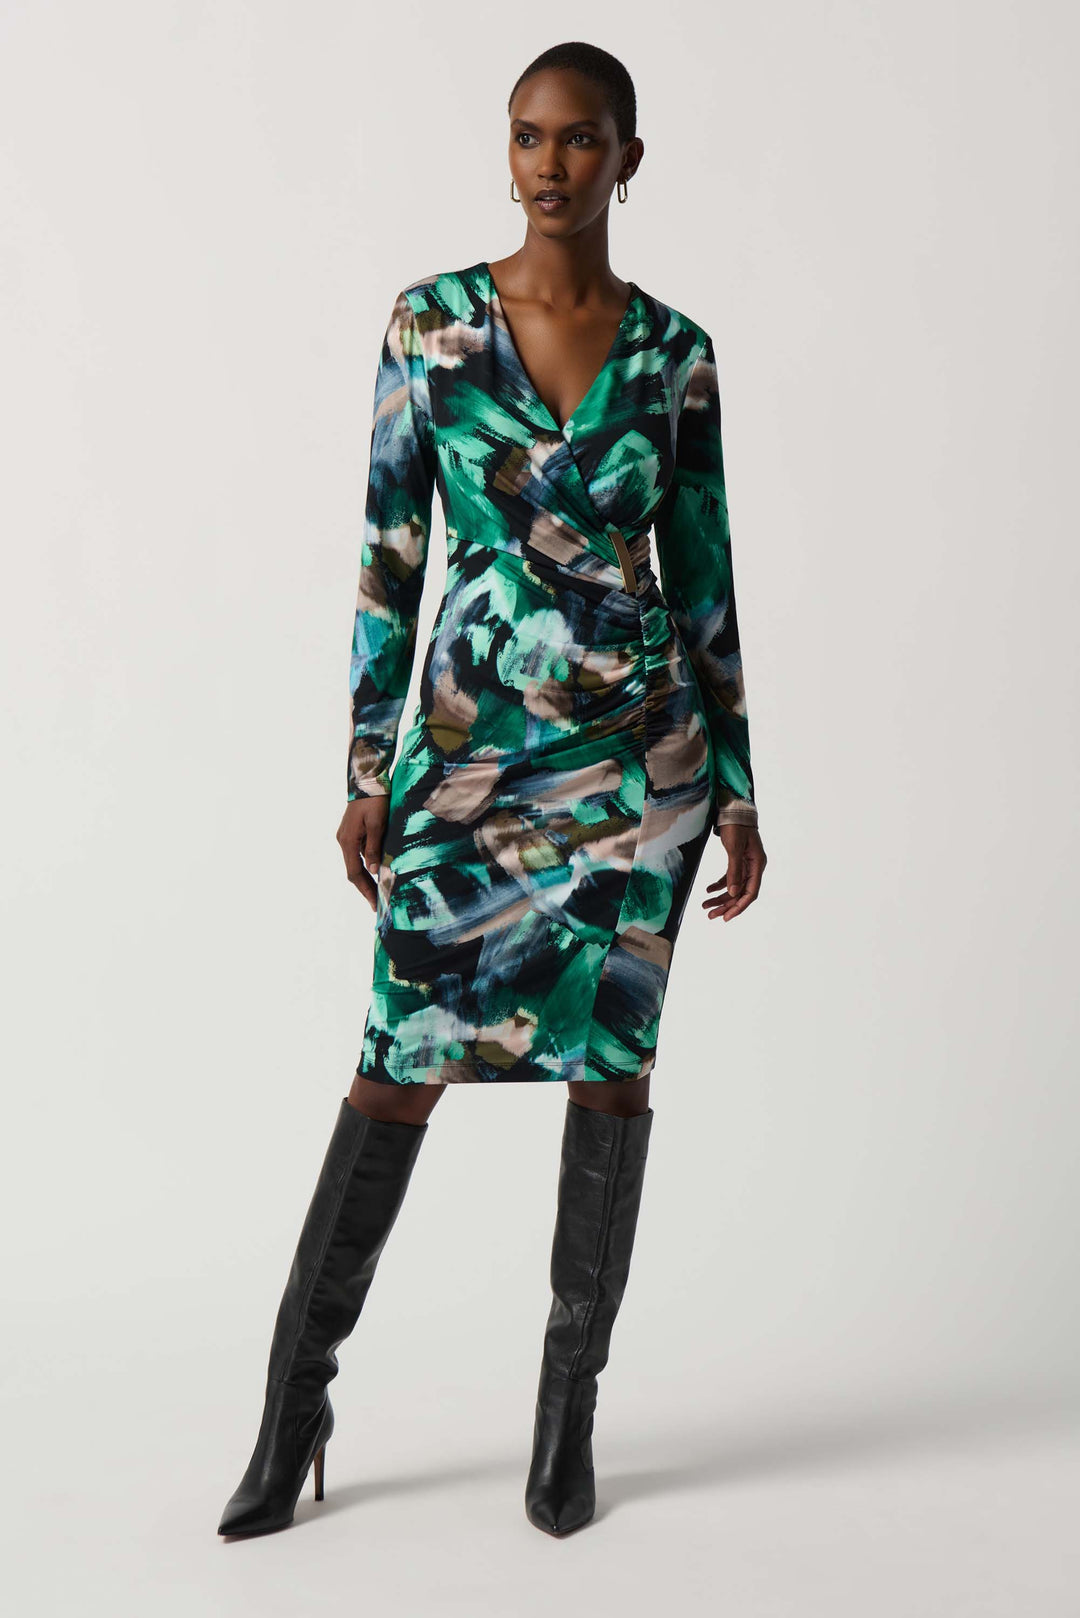 "Joseph Ribkoff Black/Multi Abstract Print Dress Style 234019"